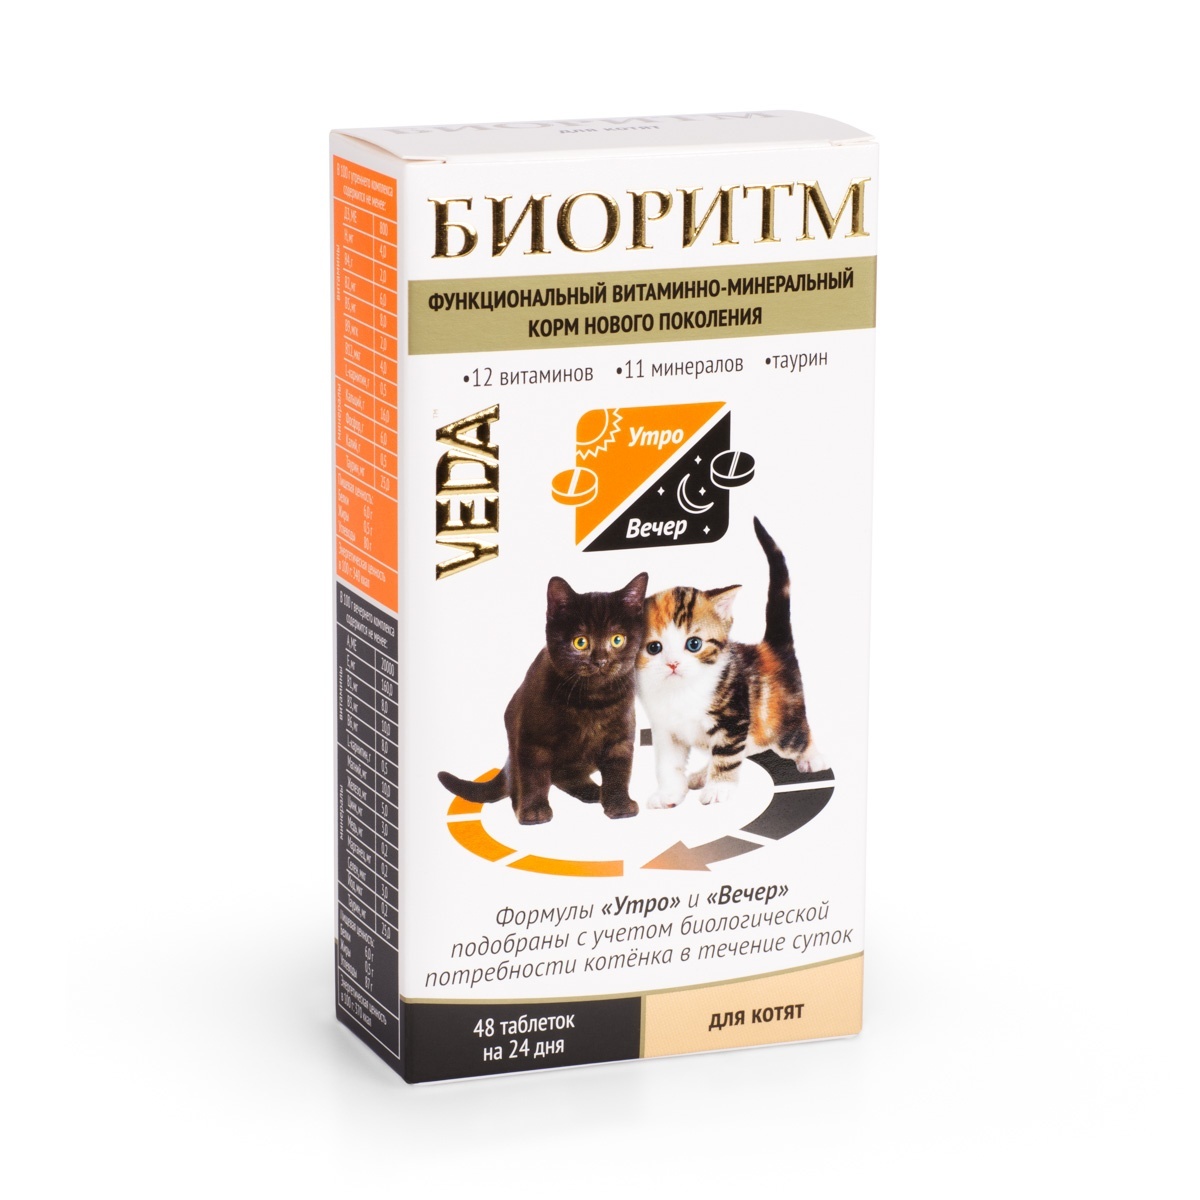 Веда Веда биоритм витамины для котят (20 г) цена и фото